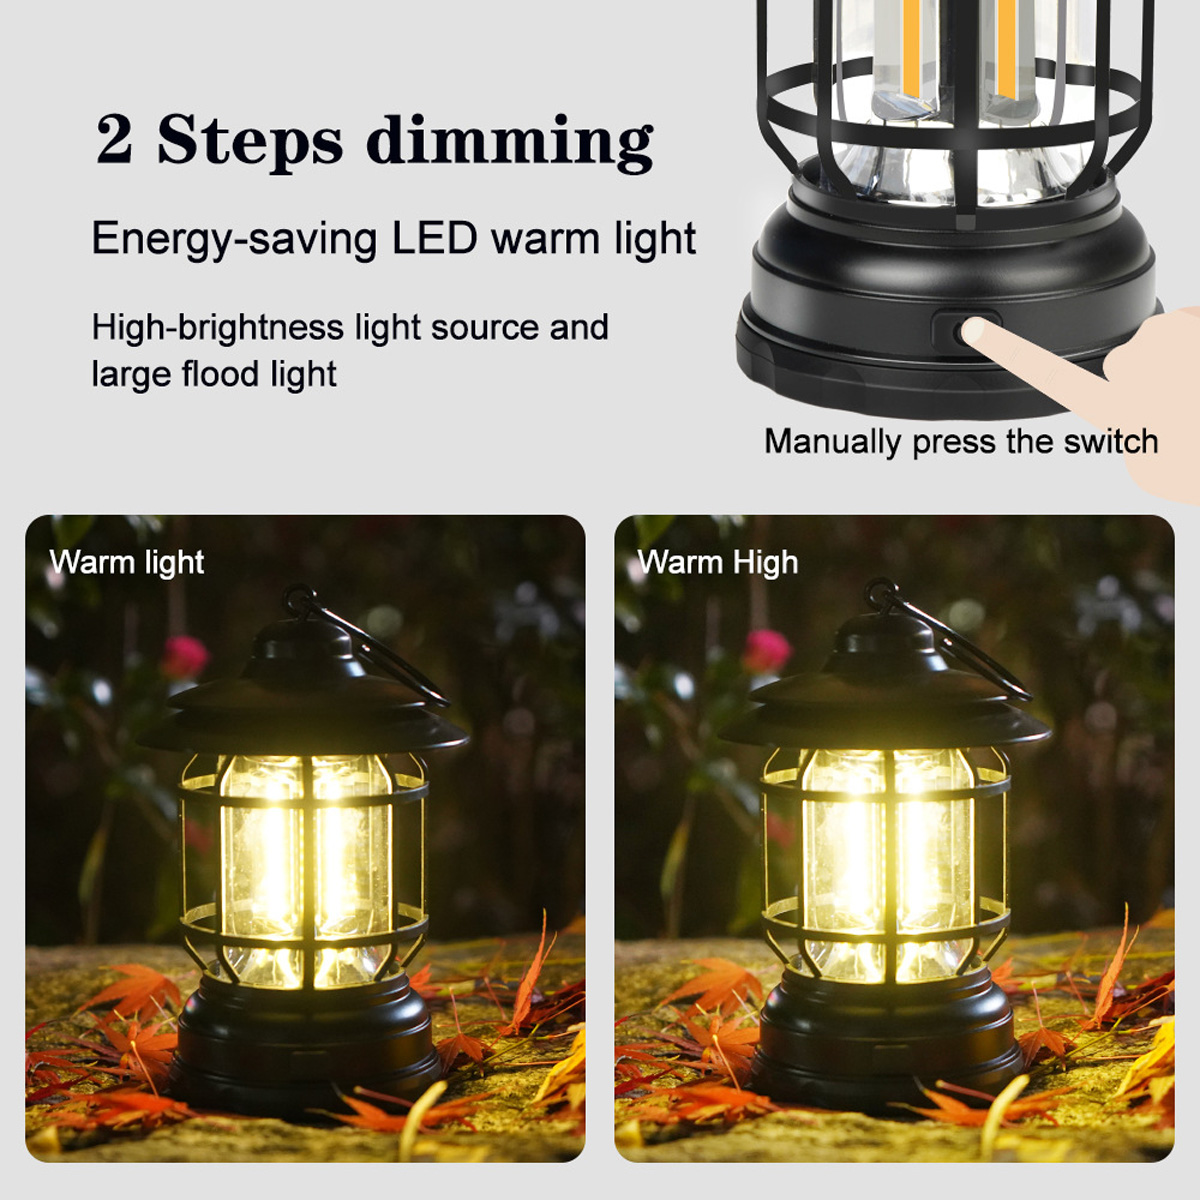 Outdoor-COB-Camping-Lamp-300LM-Retro-Light-Portable-Emergency-Lighting-Tent-Kerosene-Lantern-For-Hik-1930684-2